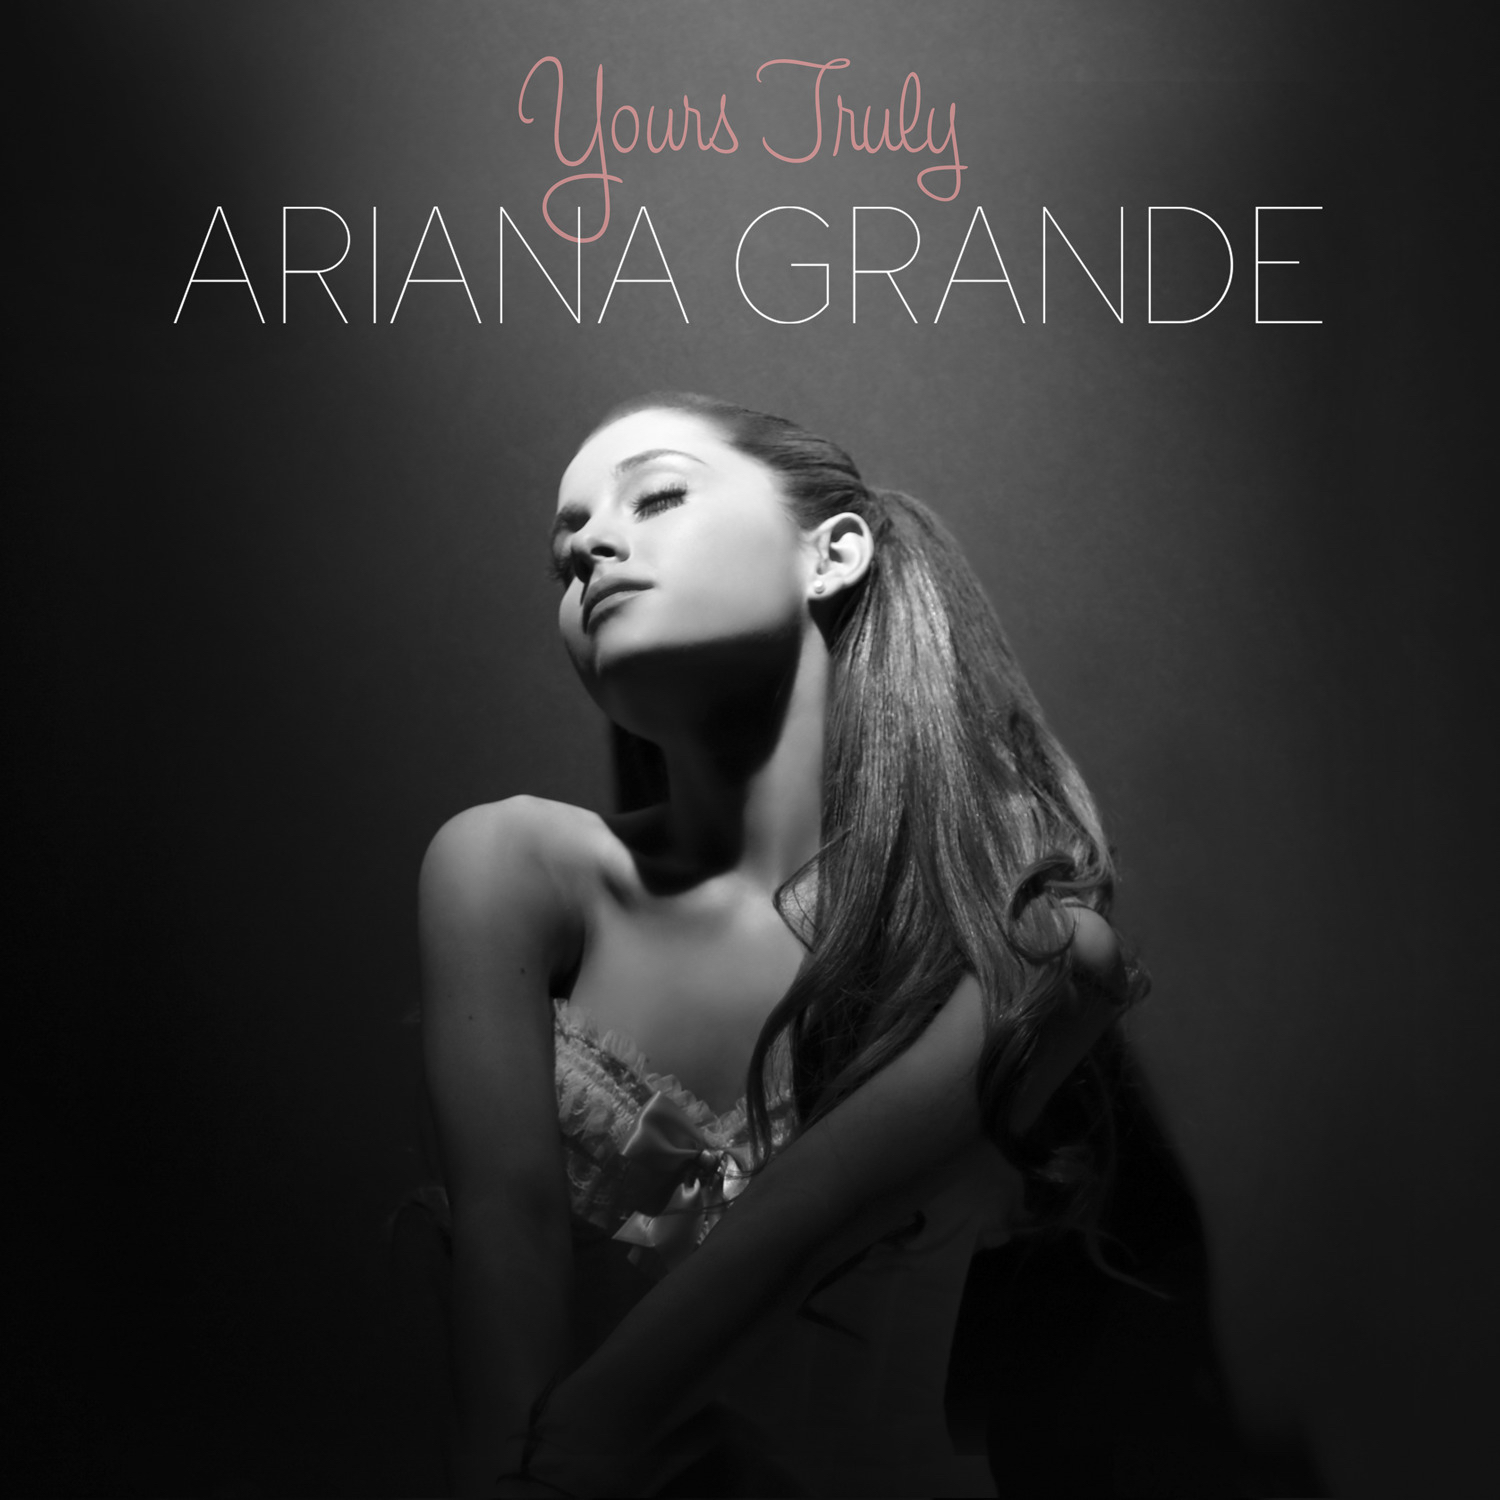 Ariana Grande — Tattooed Heart cover artwork